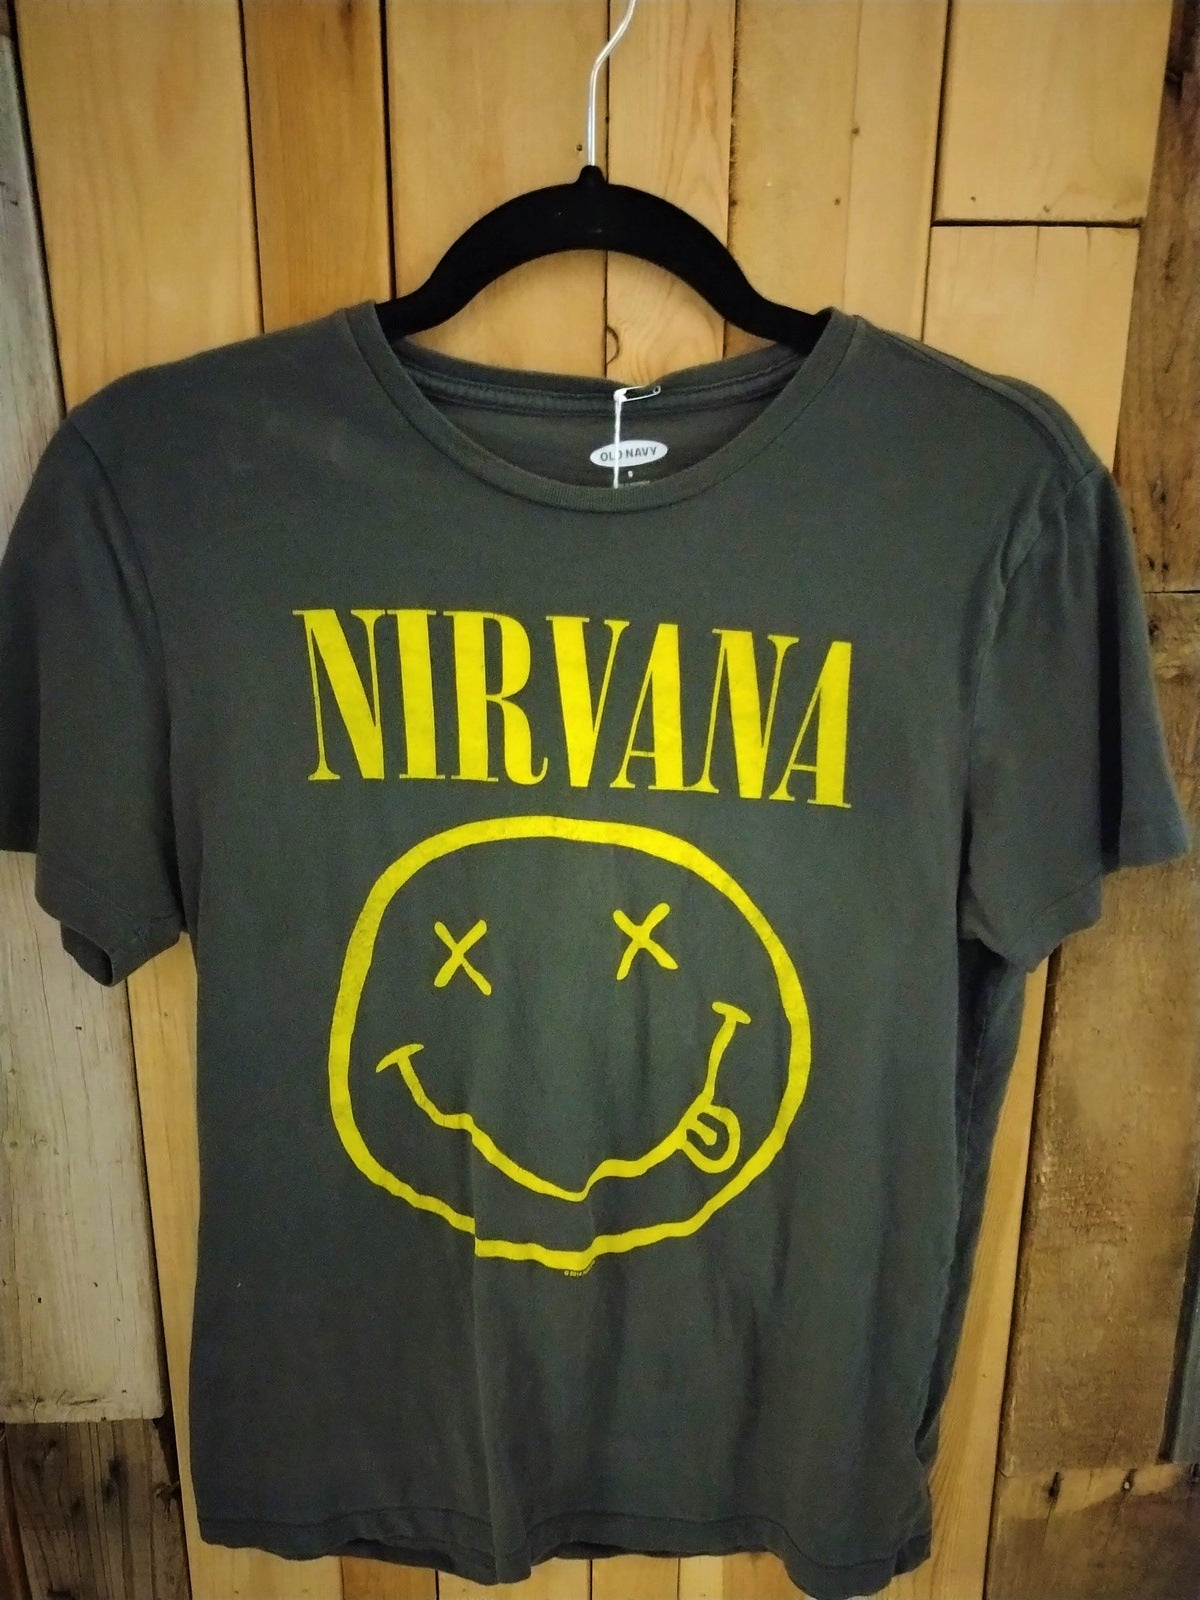 Nirvana Old Navy Tee Shirt Size Small